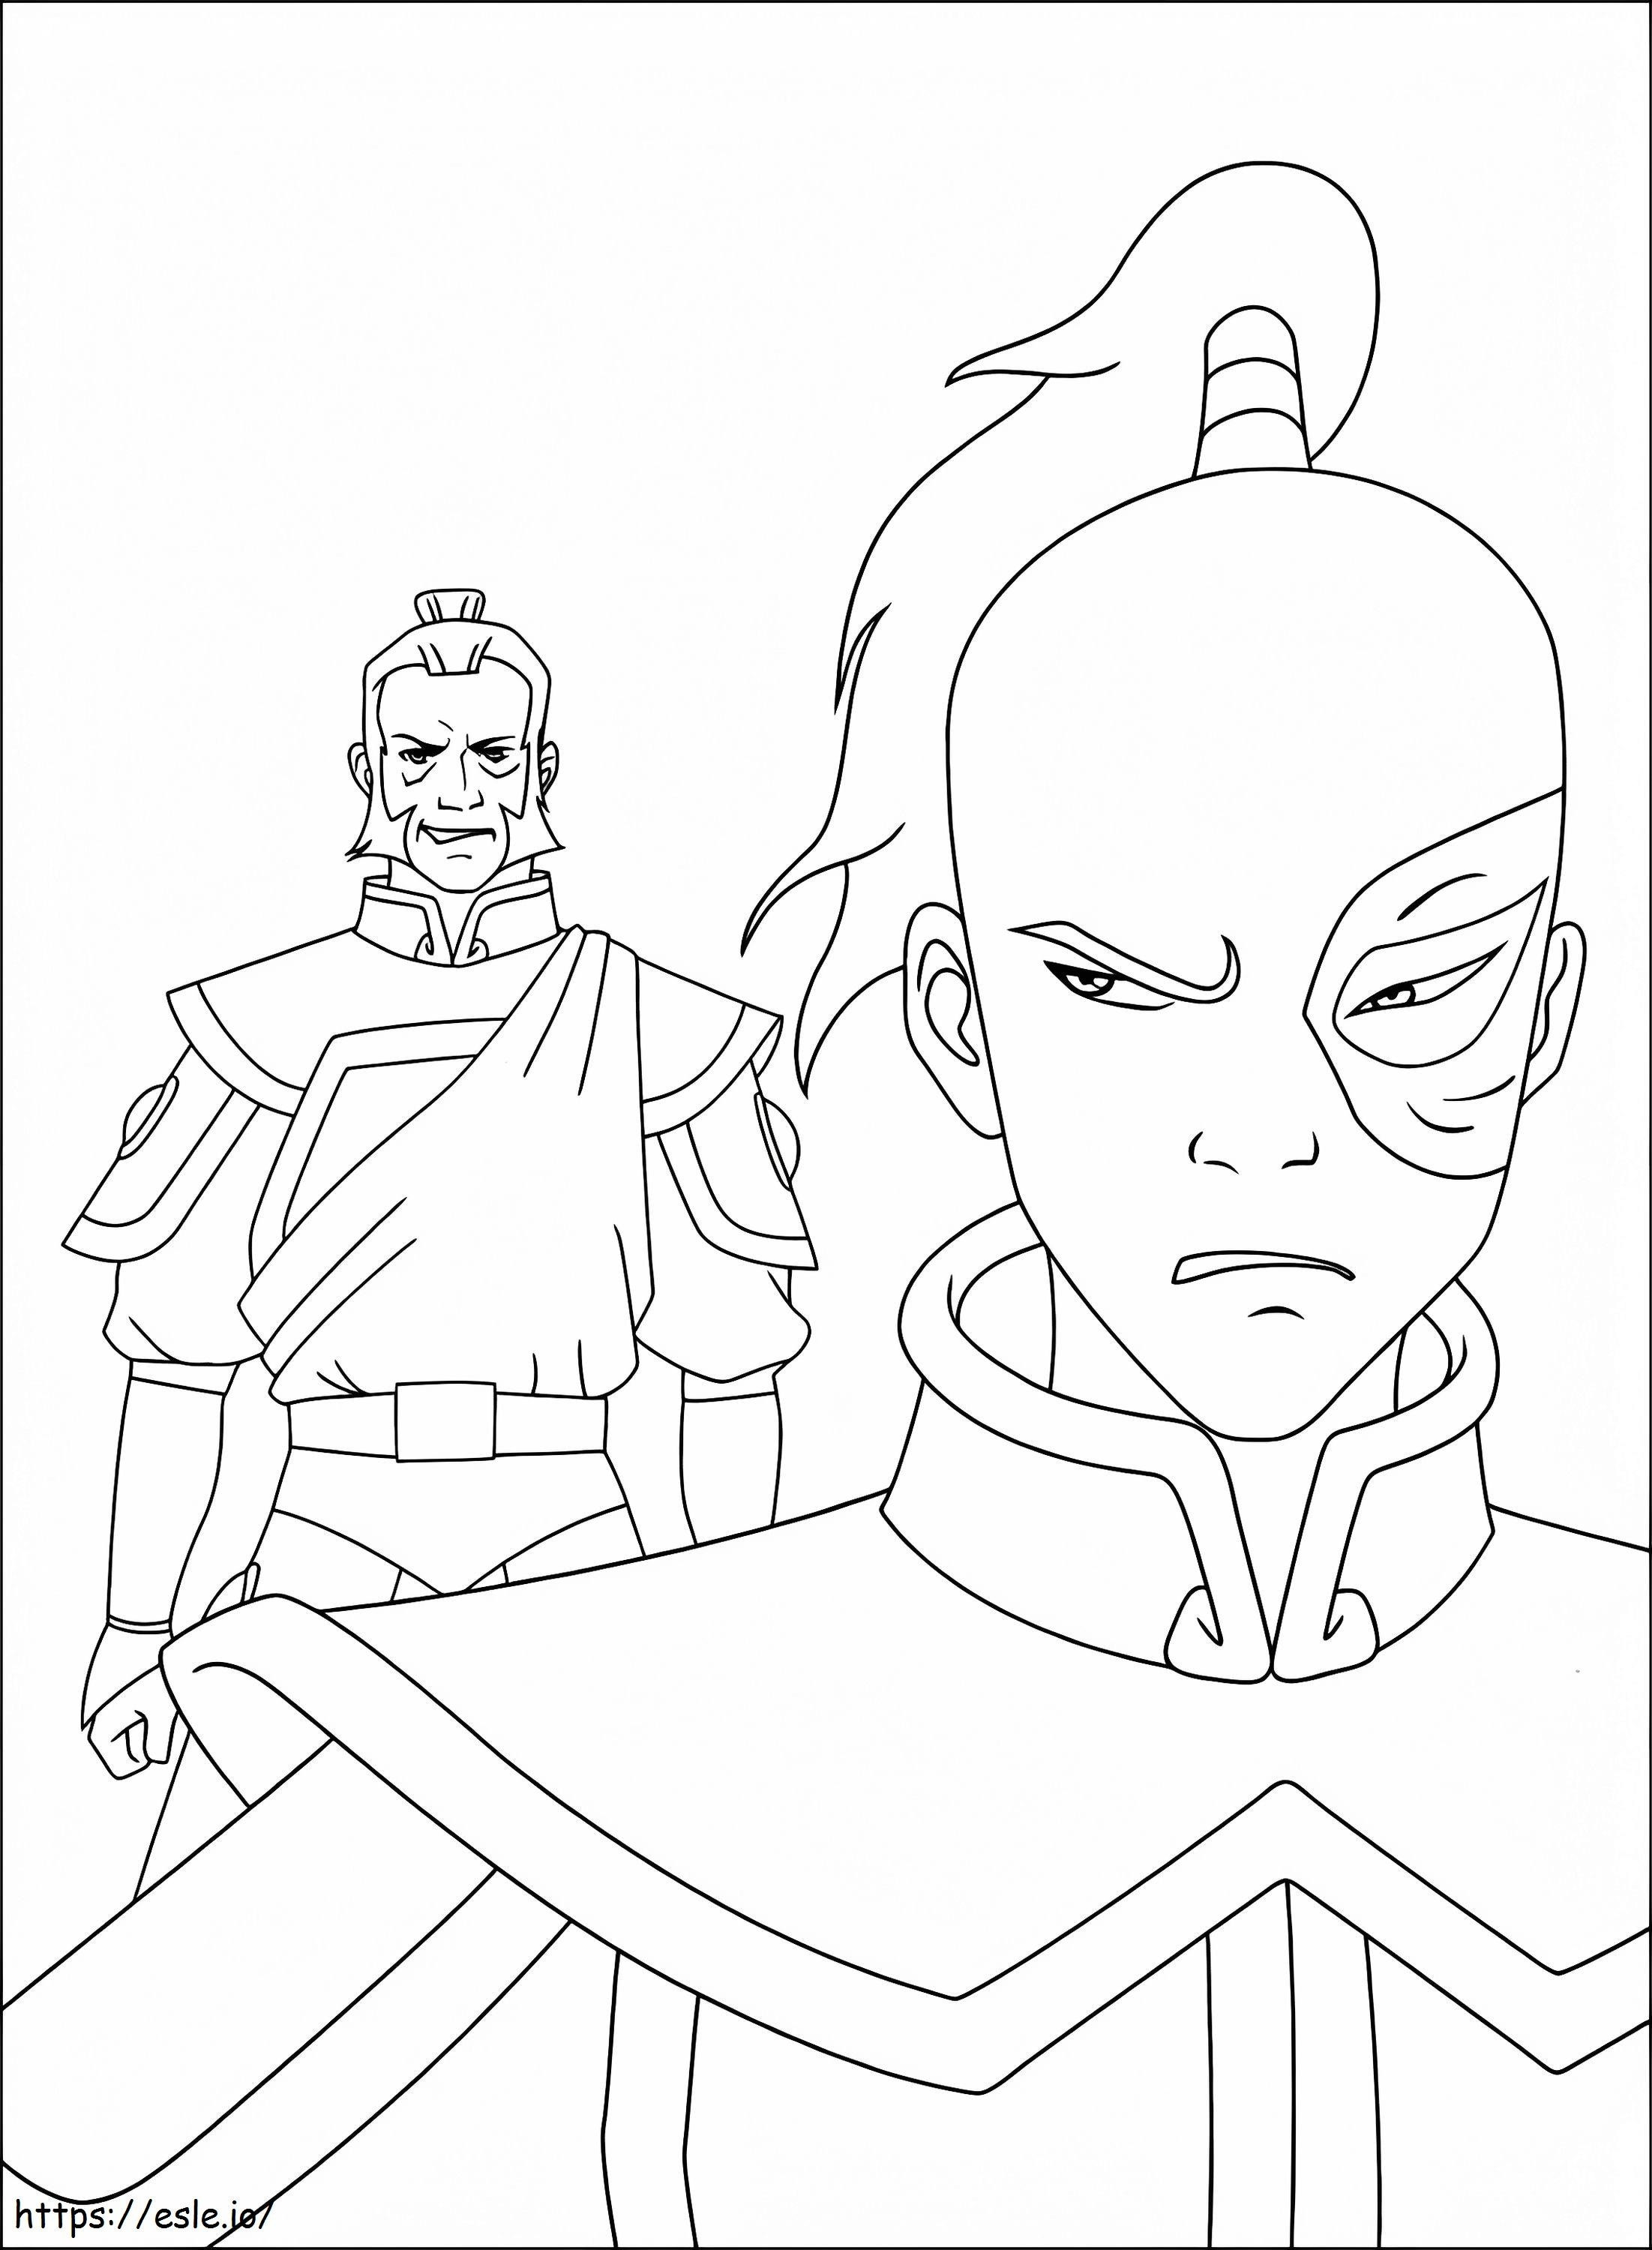  Príncipe Zuko Com Almirante Zhao A4 para colorir